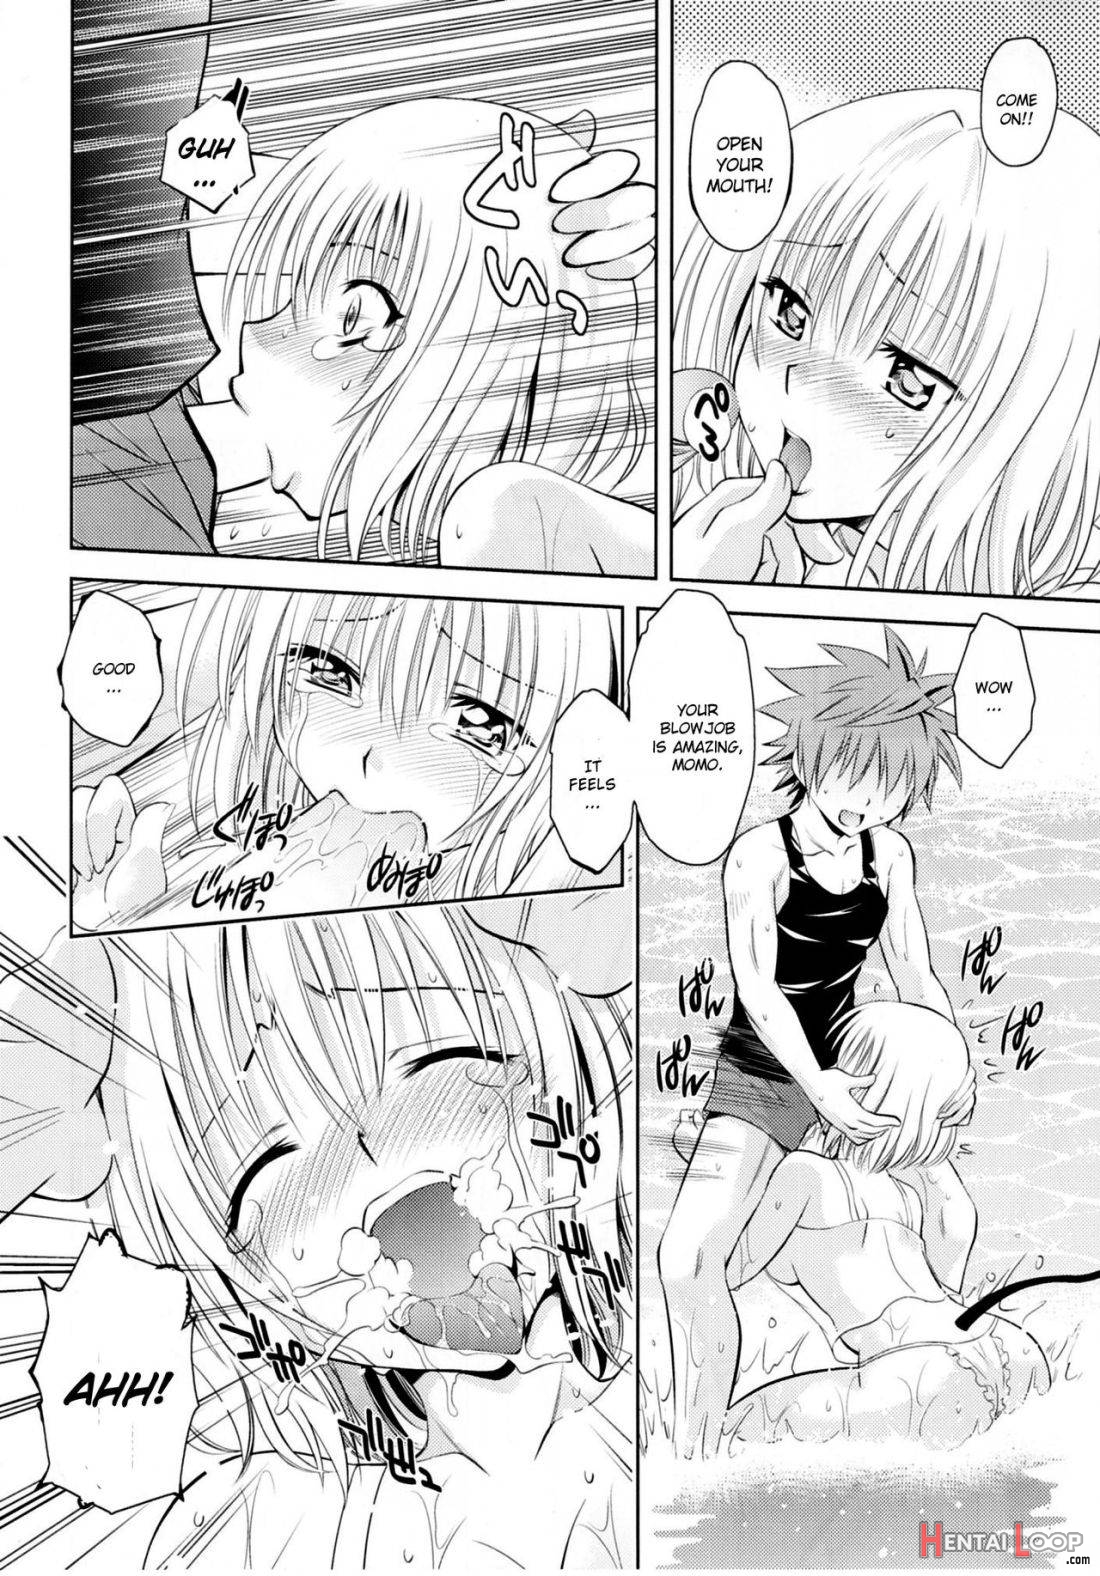 Troublekko ~Momo & Nana~ page 11